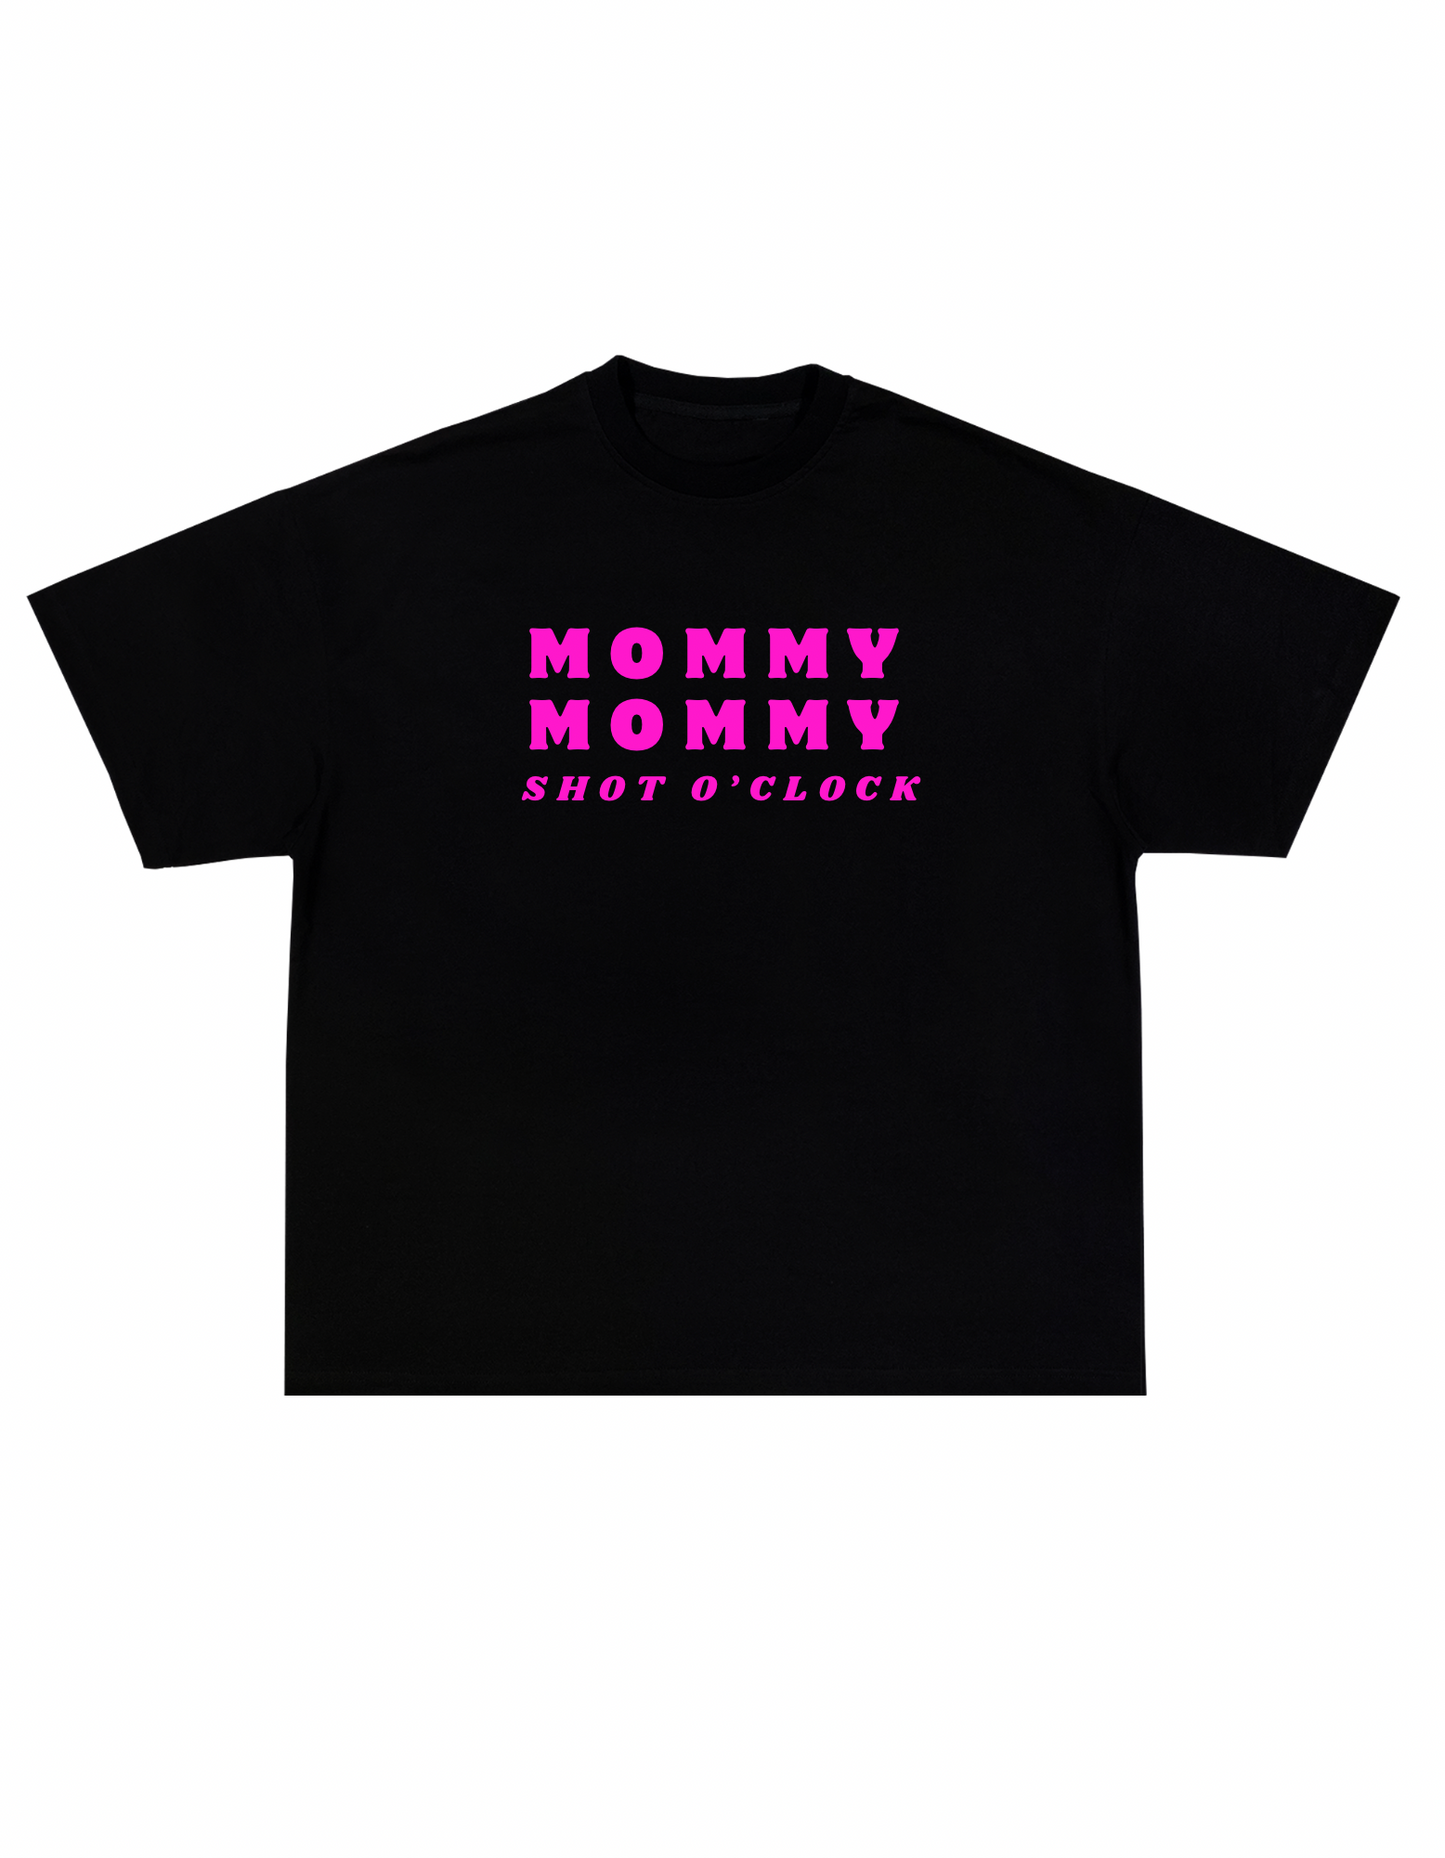 Mommy Mommy Shot O’ Clock Funny Mom Cotton Black T-Shirt